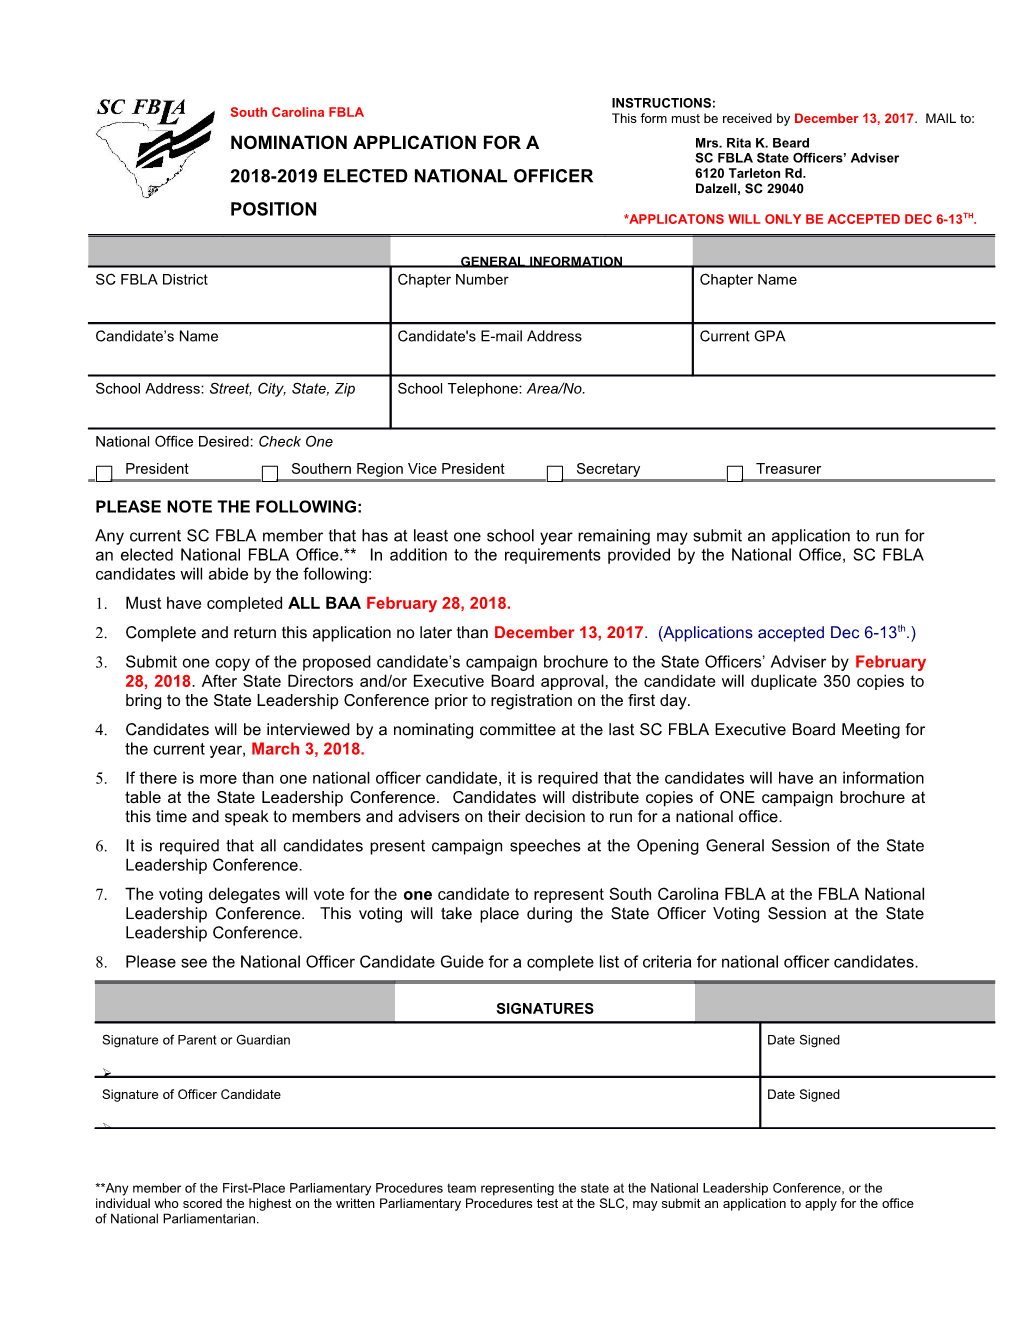 National Officer Nomination Application Form